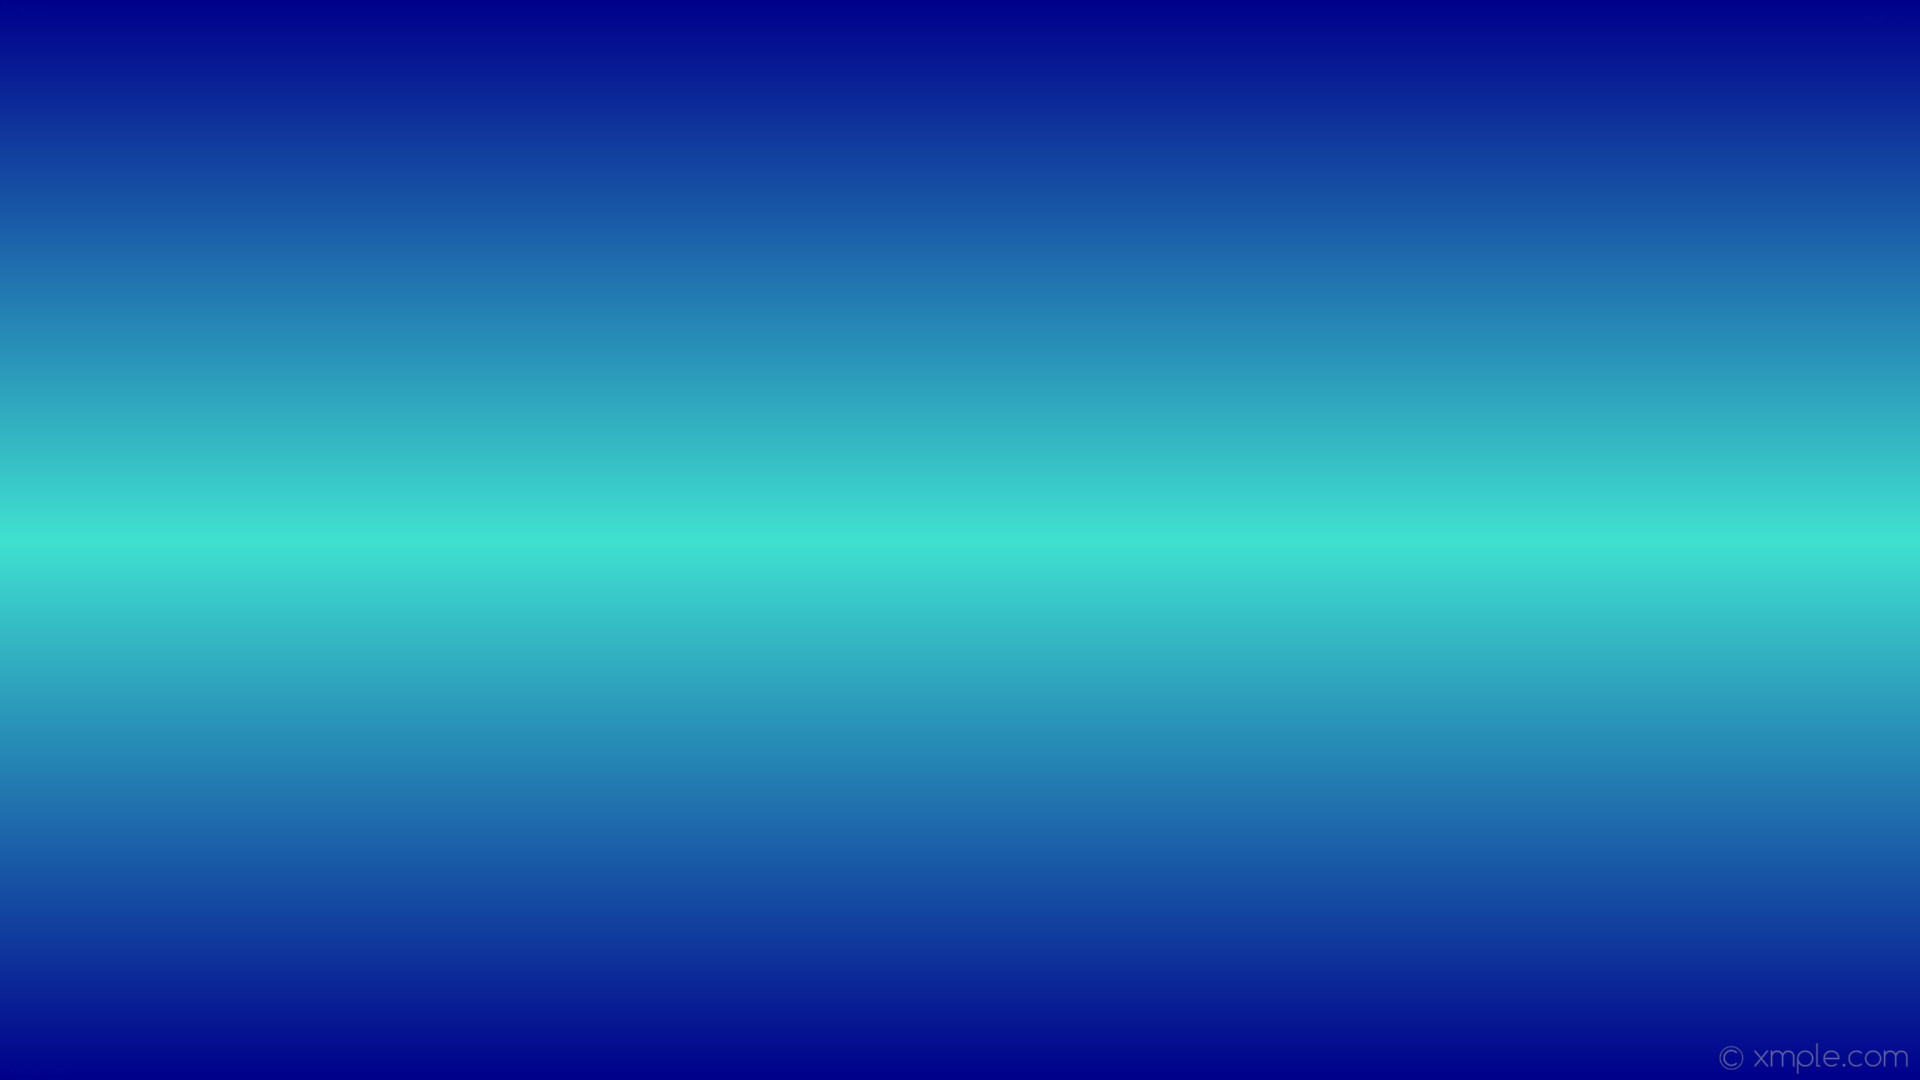 1920x1080 wallpaper highlight blue gradient linear dark blue turquoise #00008b  #40e0d0 90Â° 50%